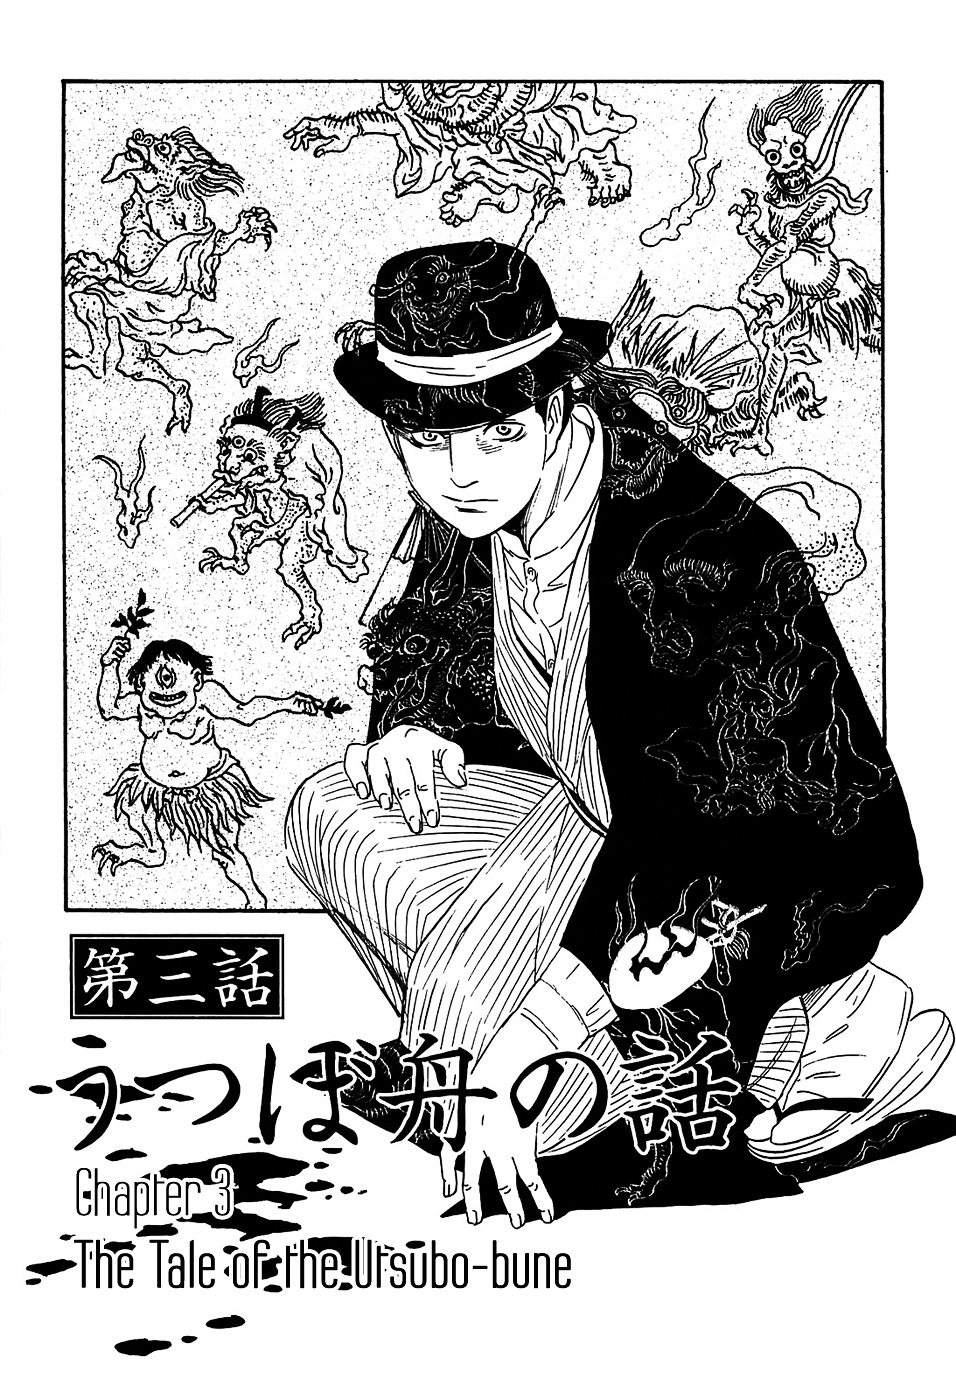 Matsuoka Kunio: Youkai Exterminator - Kurosagi Corpse Delivery Service Spin-Off - Page 1